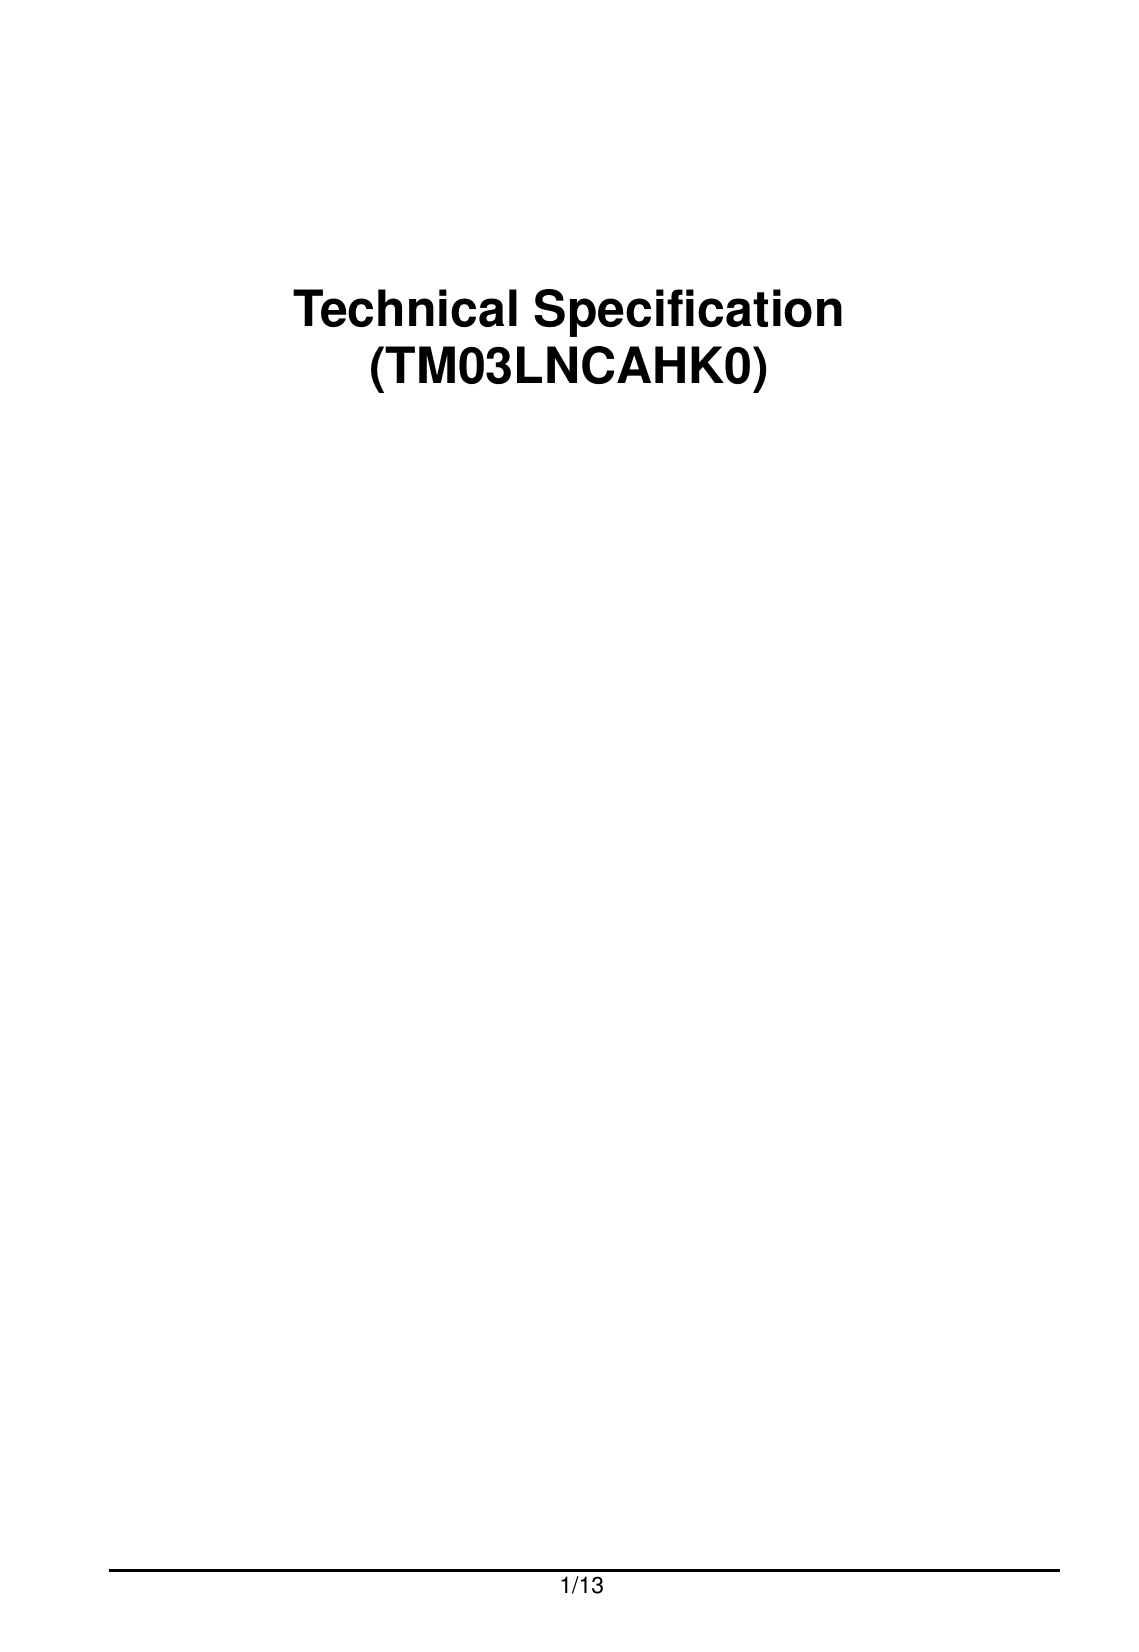  1/13      Technical Specification (TM03LNCAHK0)           